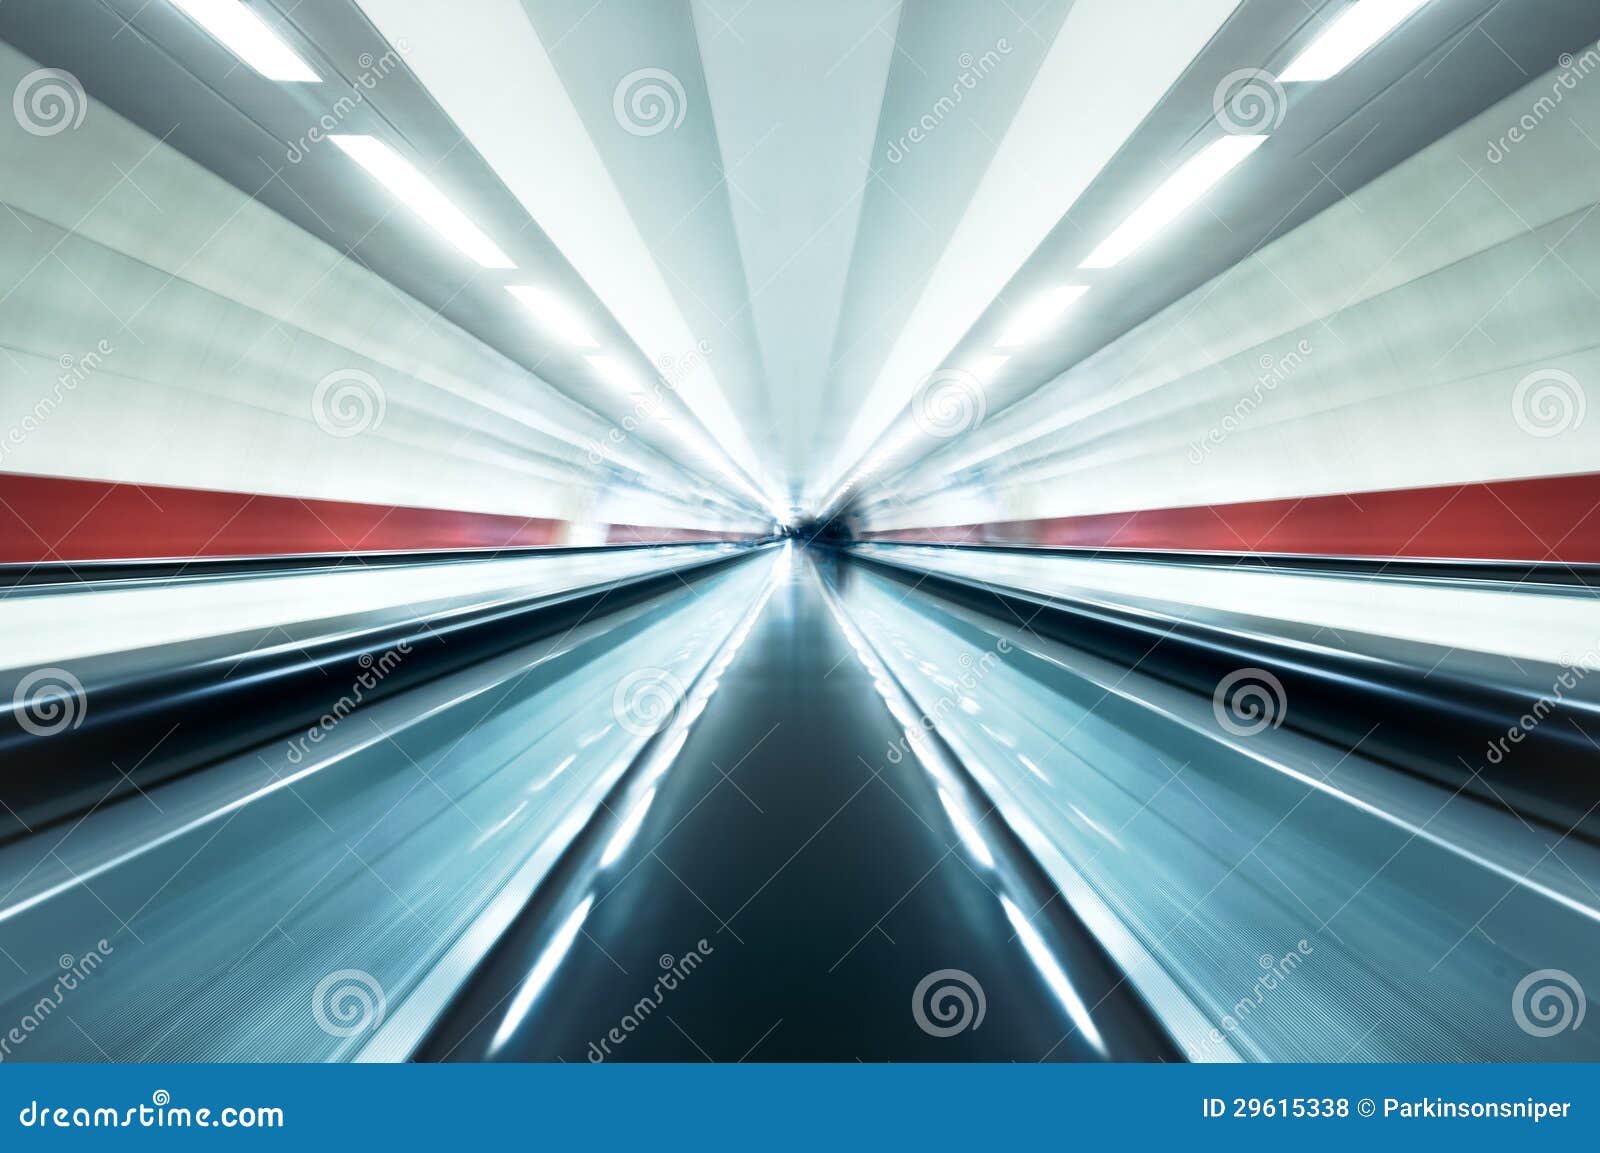 speed tunnel